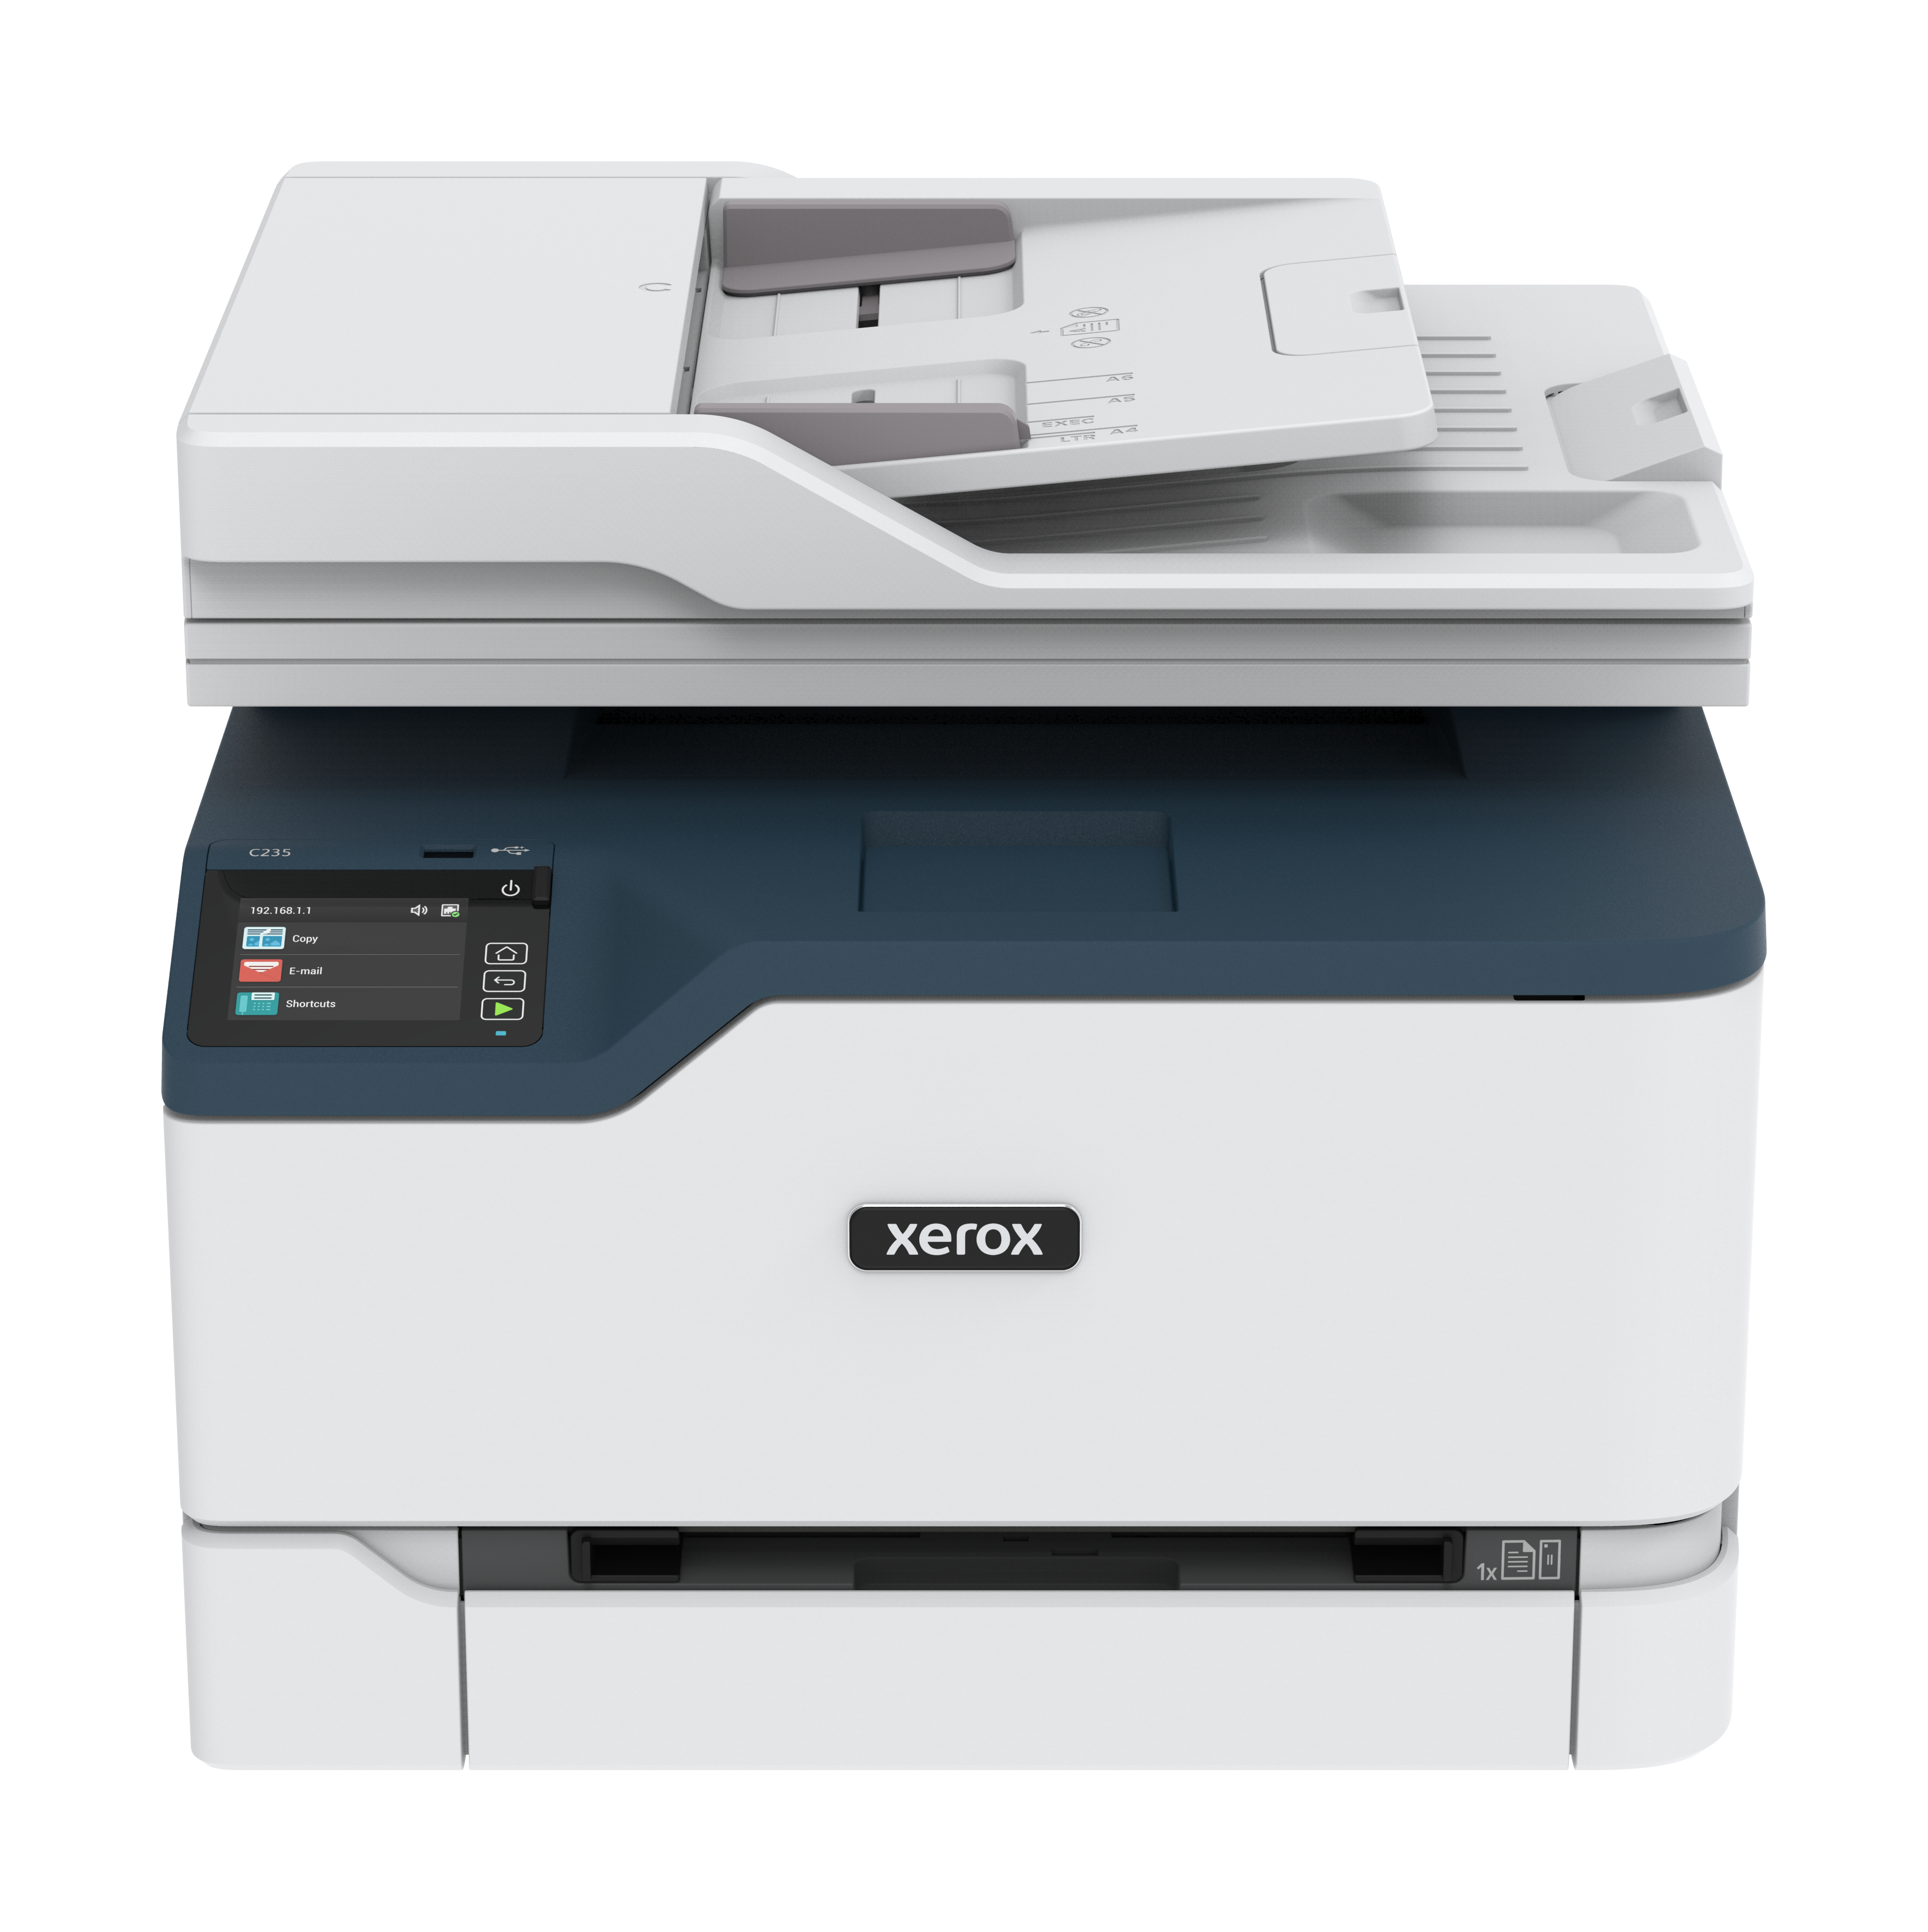 Xerox® C235 Colour Multifunction Printer - Front